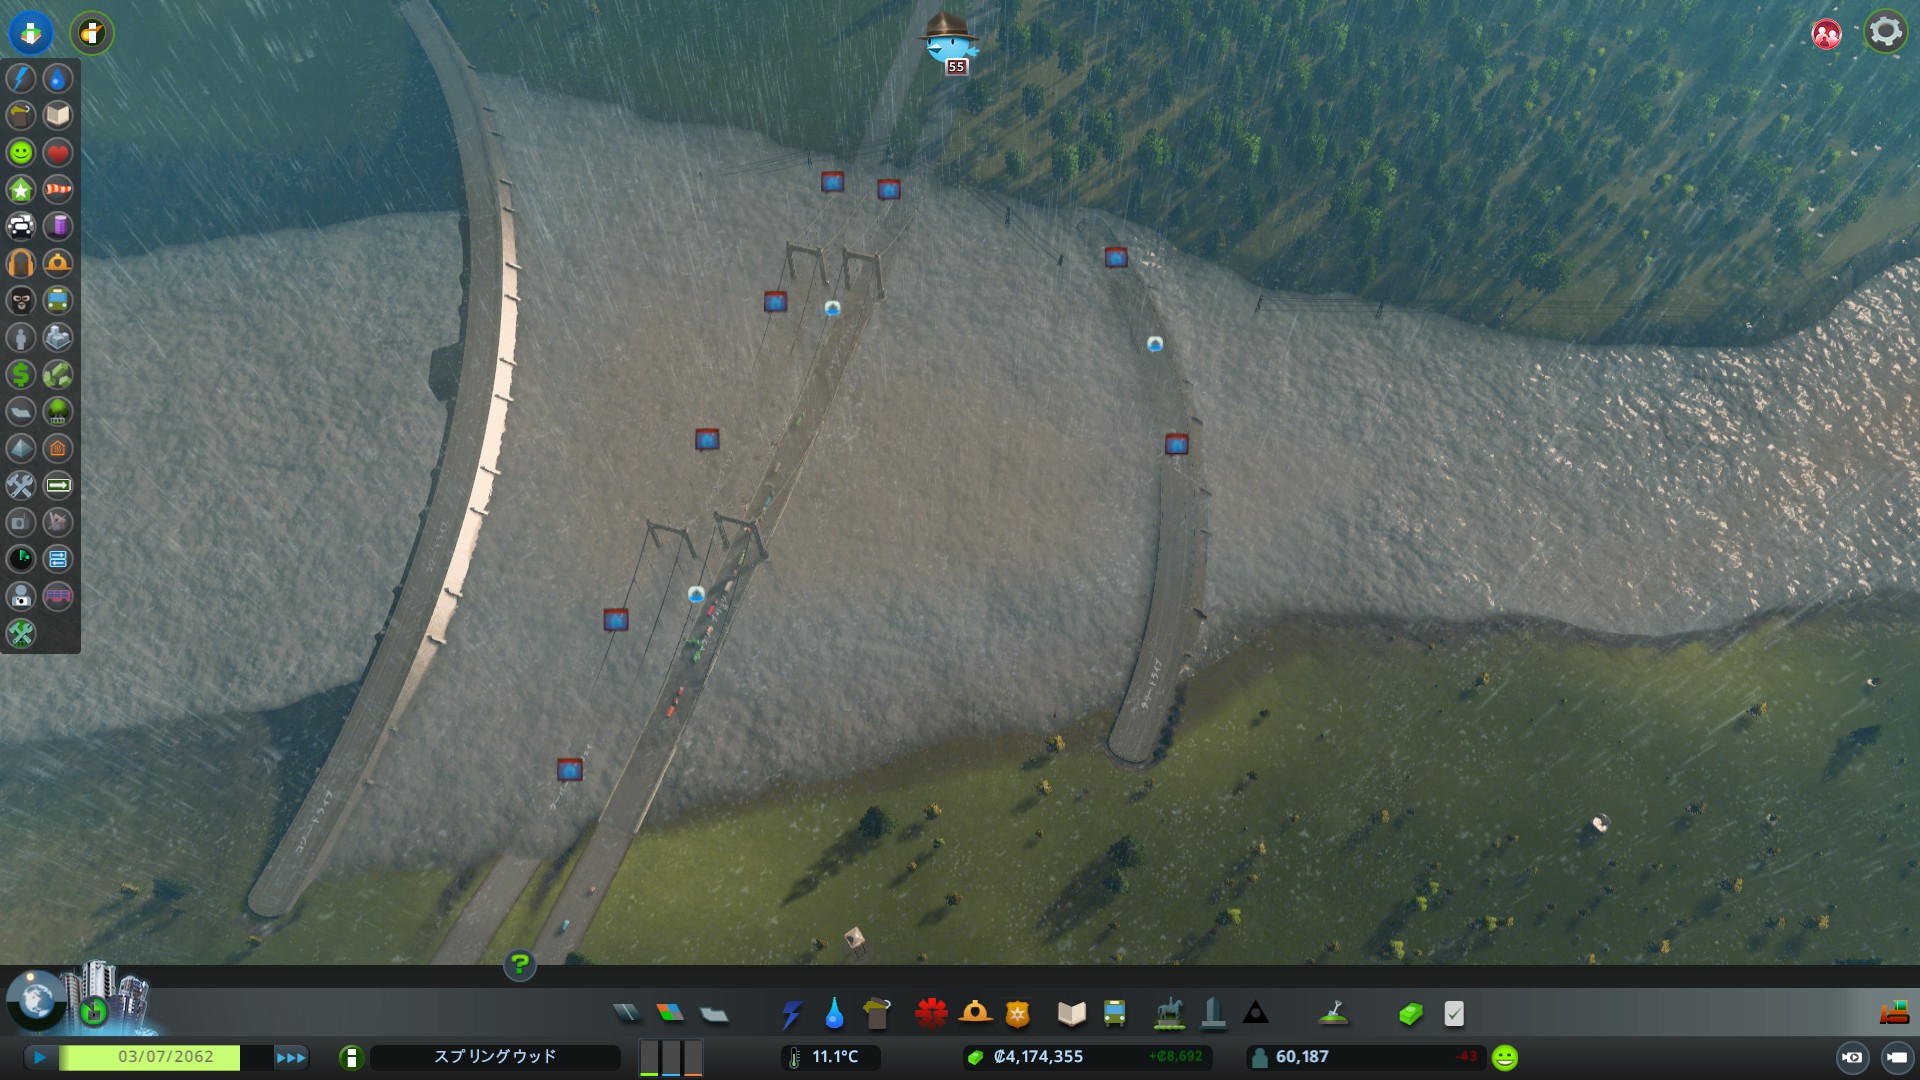 Steam Community Screenshot 気まぐれで水力発電 ダムを作ったところ高速道路が水没 もっと上流の川辺の家々も水没してた ダムを作るなら護岸工事もセットで考えたほうがいいなぁ